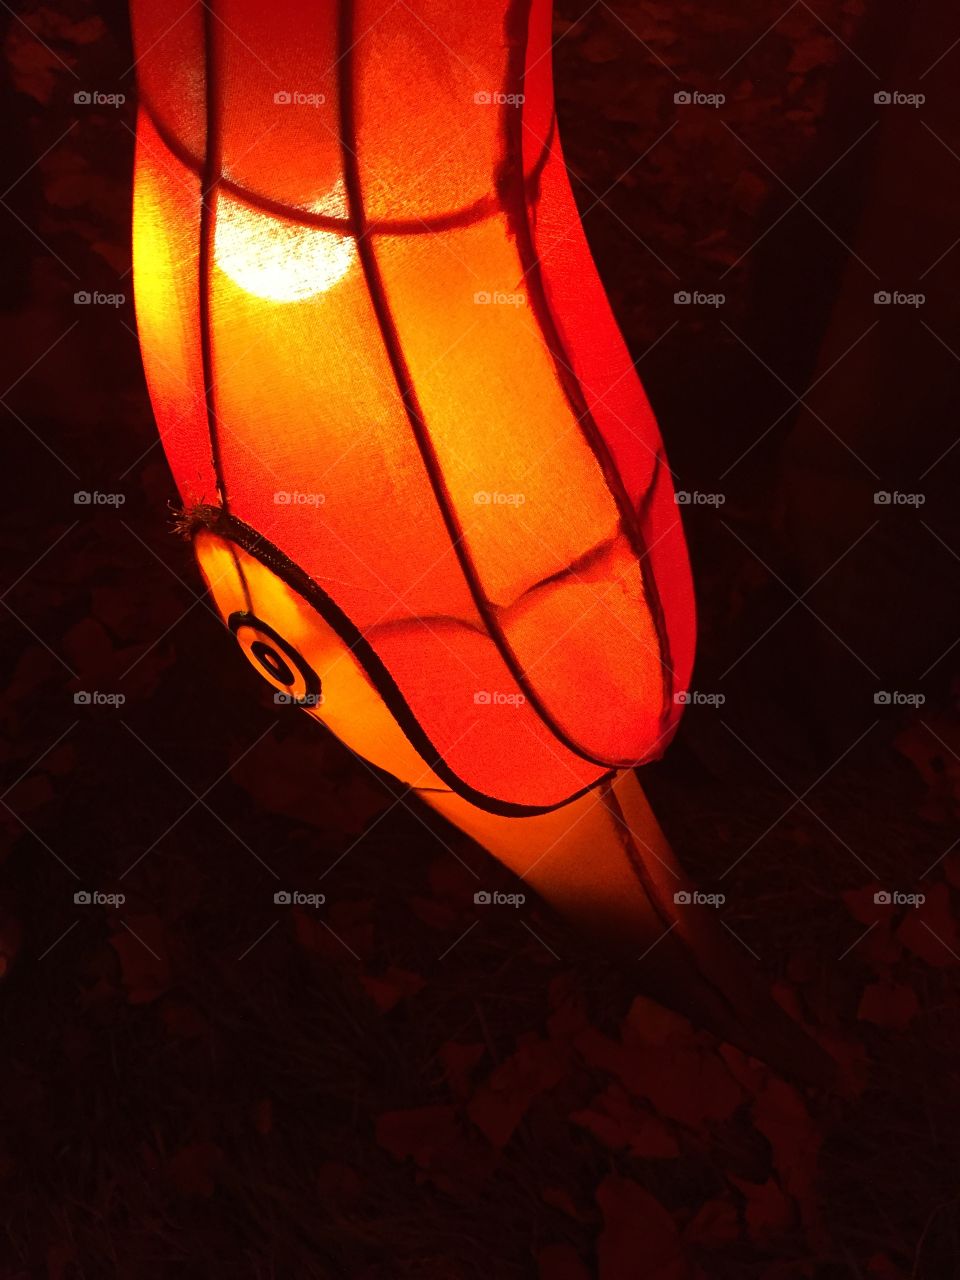 Lantern fest 